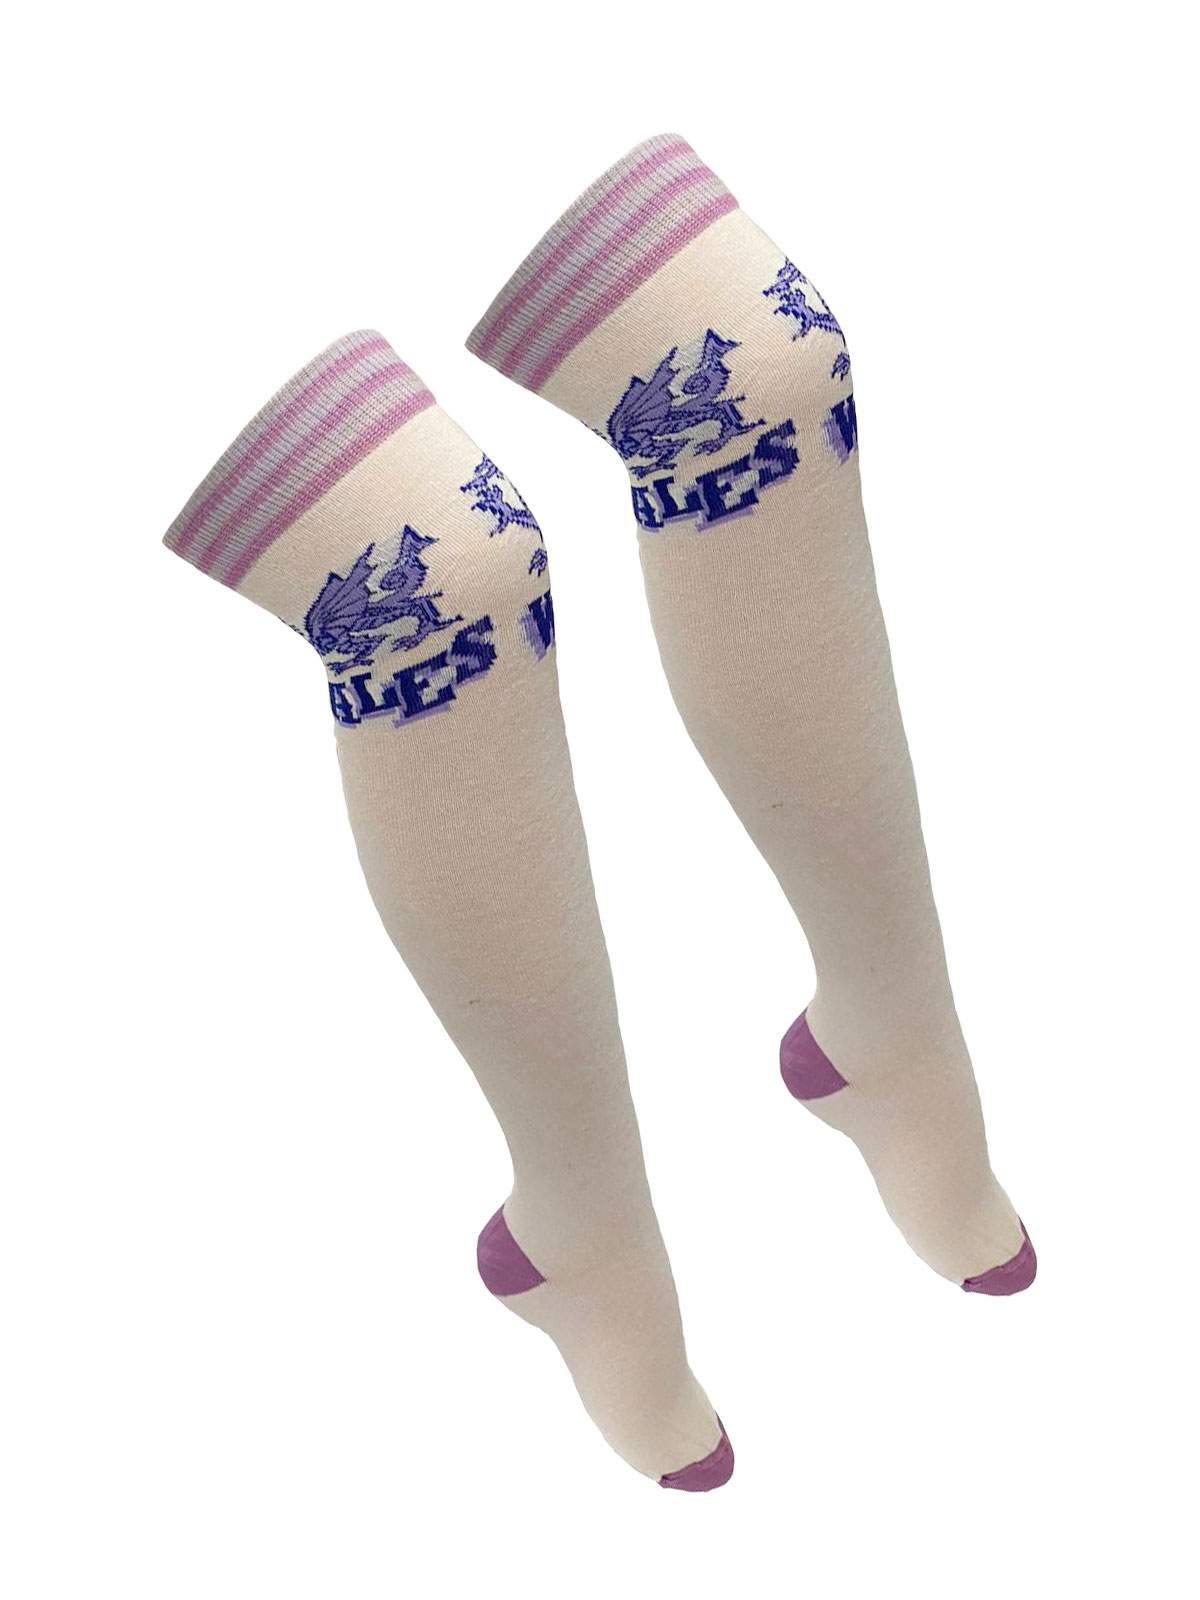 Crazy Chick Wales White and Purple OTK Socks (12 Pairs)